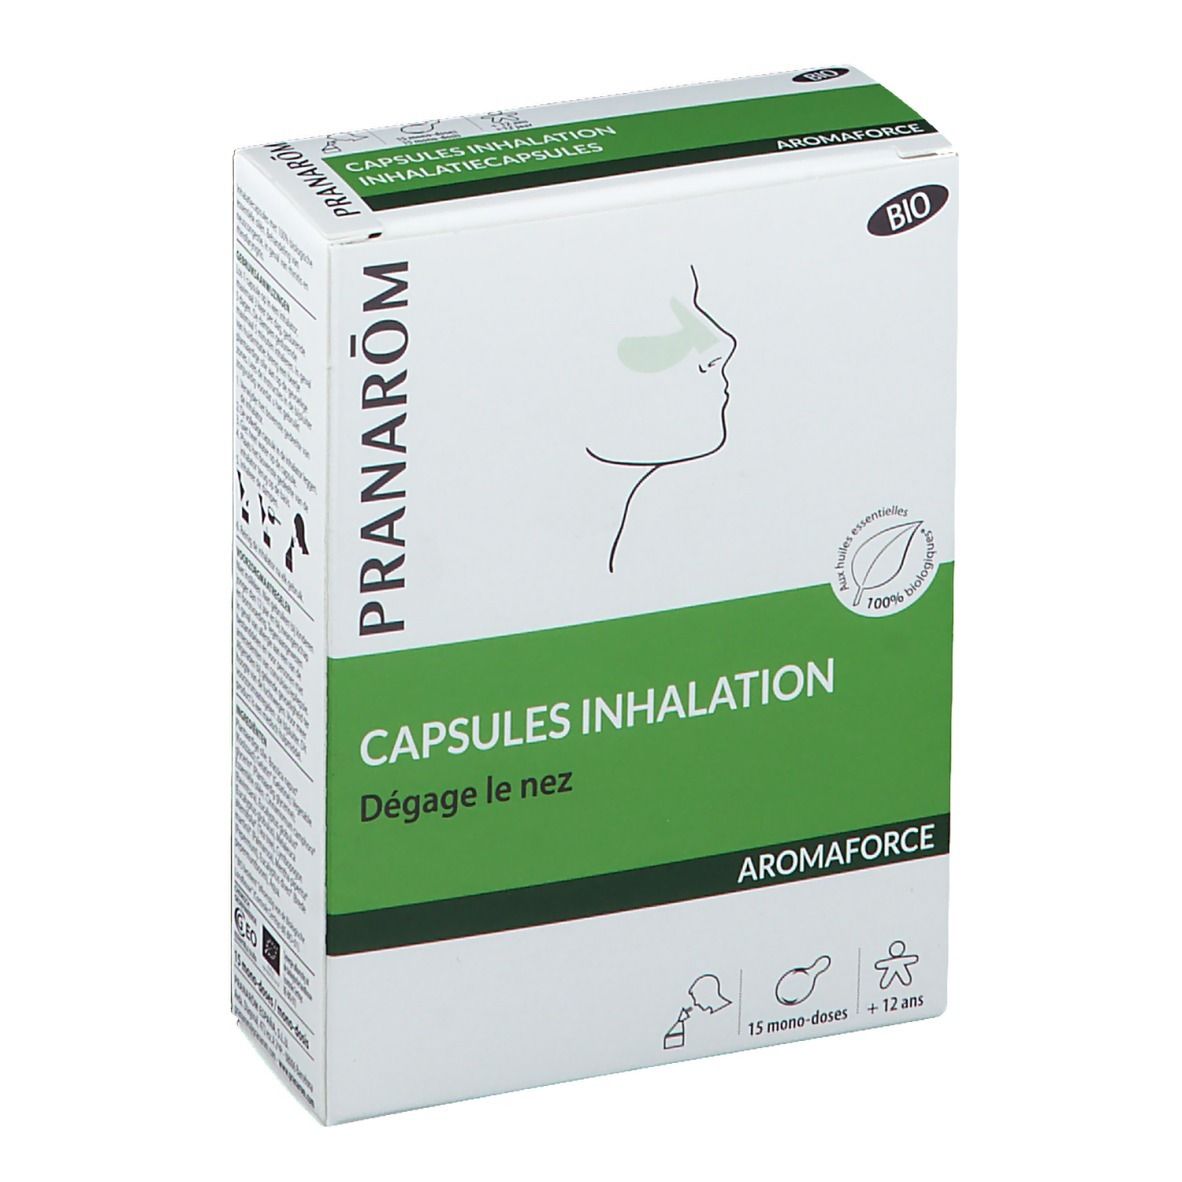 Aromaforce - Capsules Inhalation BIO - 15 mono-doses - PRANAROM